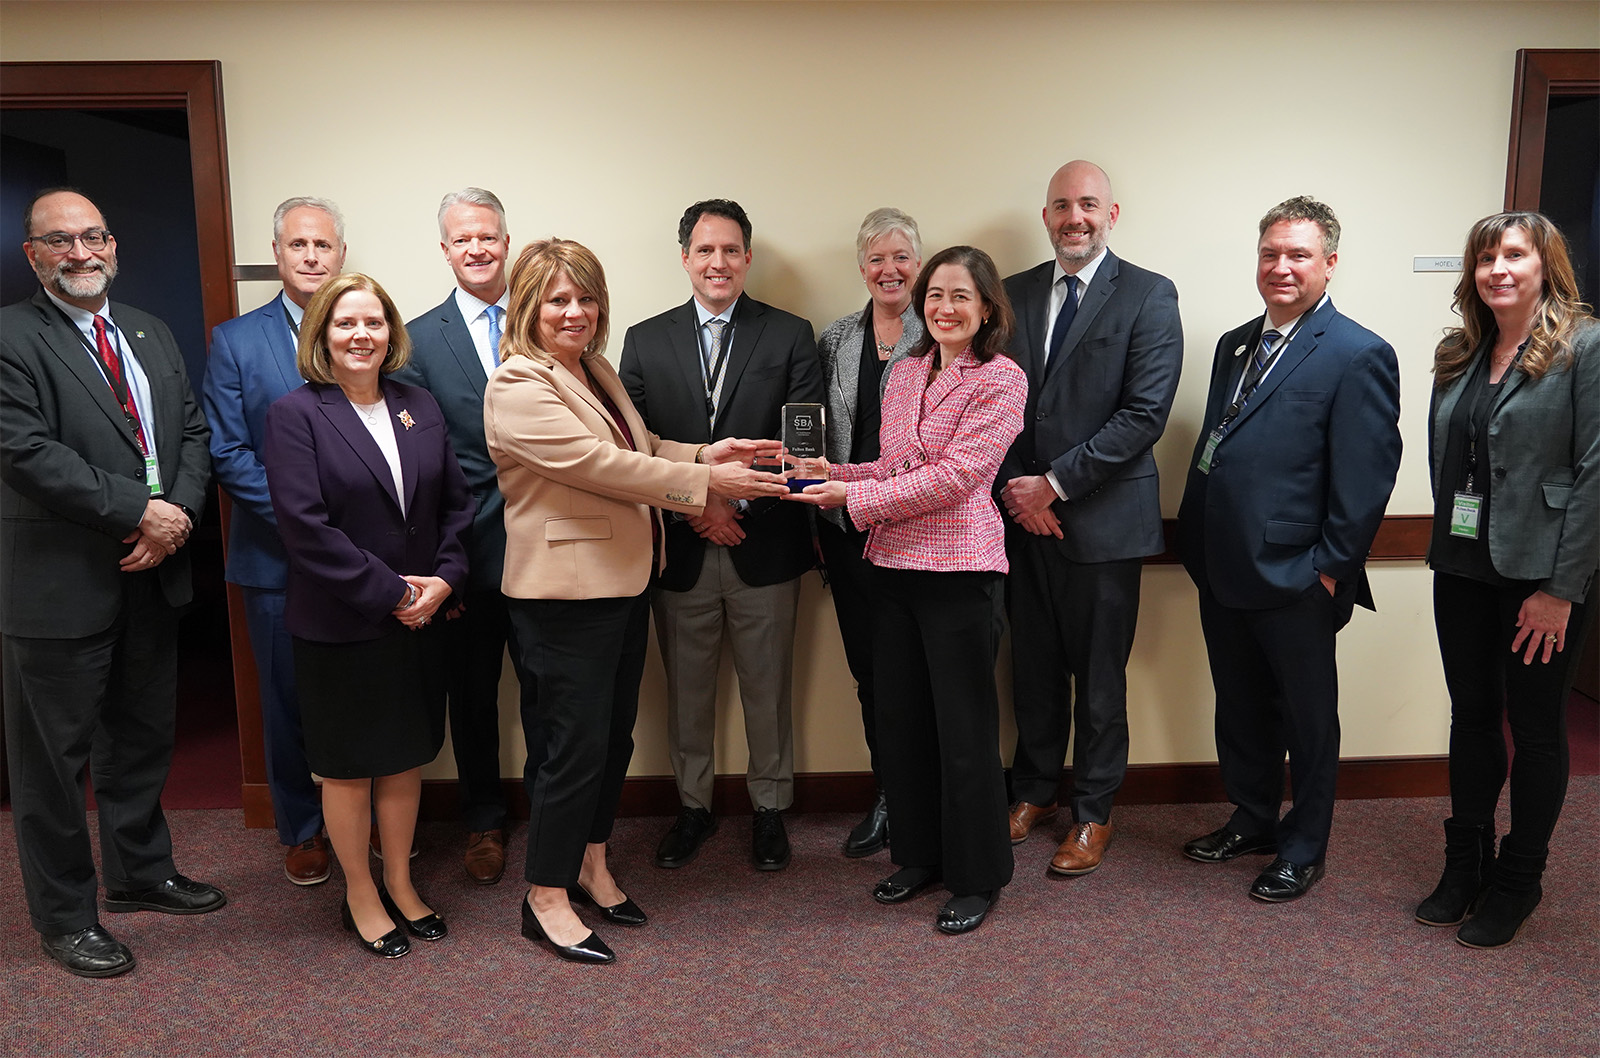 Members of Fulton Bank leadership receiving the SBA Export Lender Award